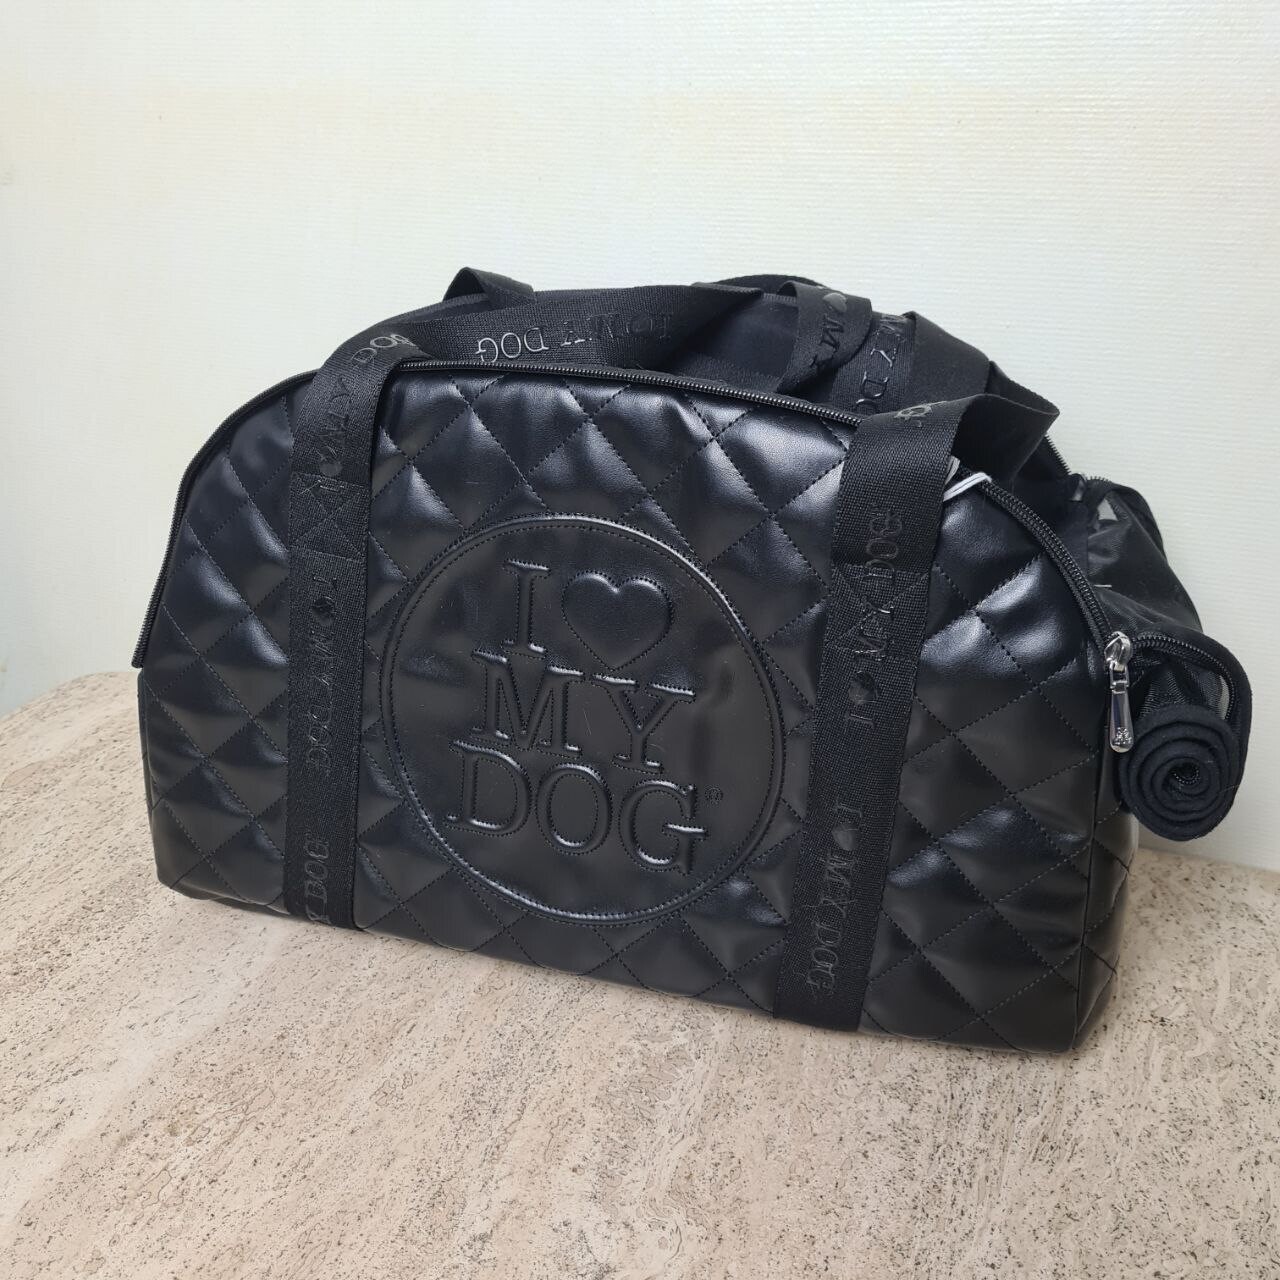 Fantasy black Carrier bag - Stock